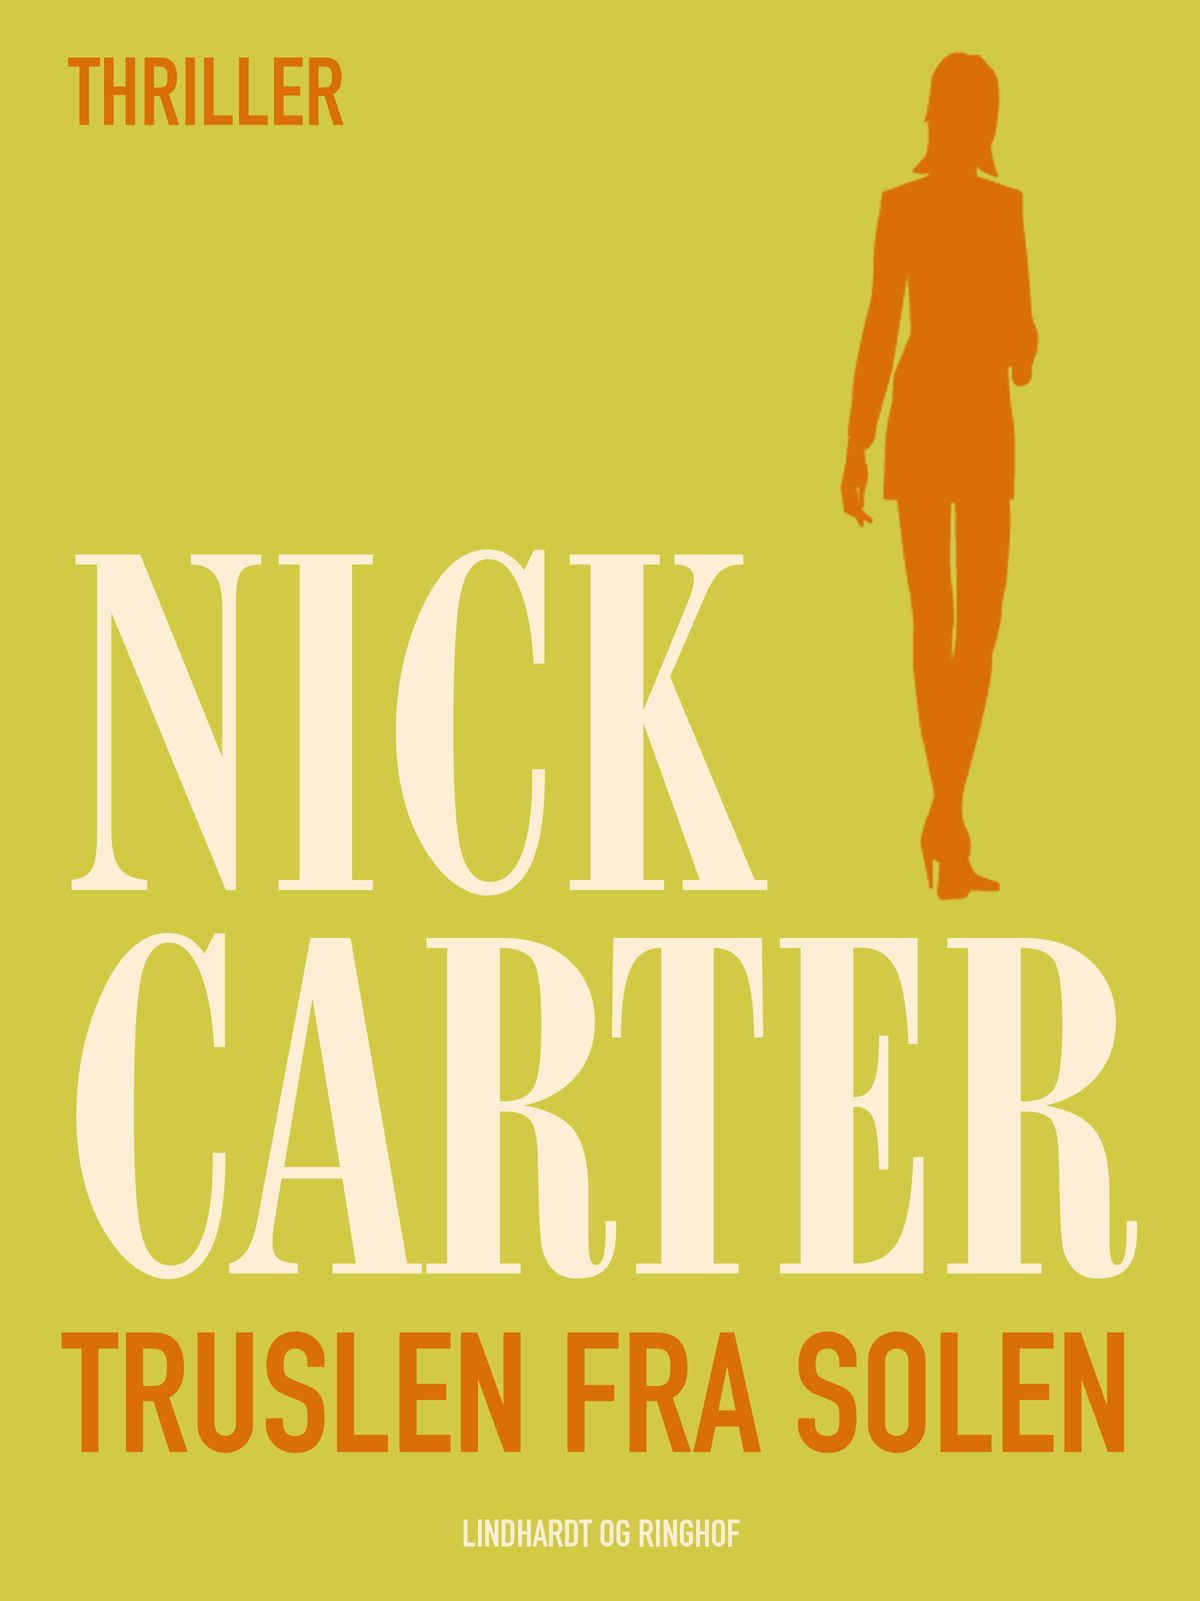 nick carter killmaster ebooks